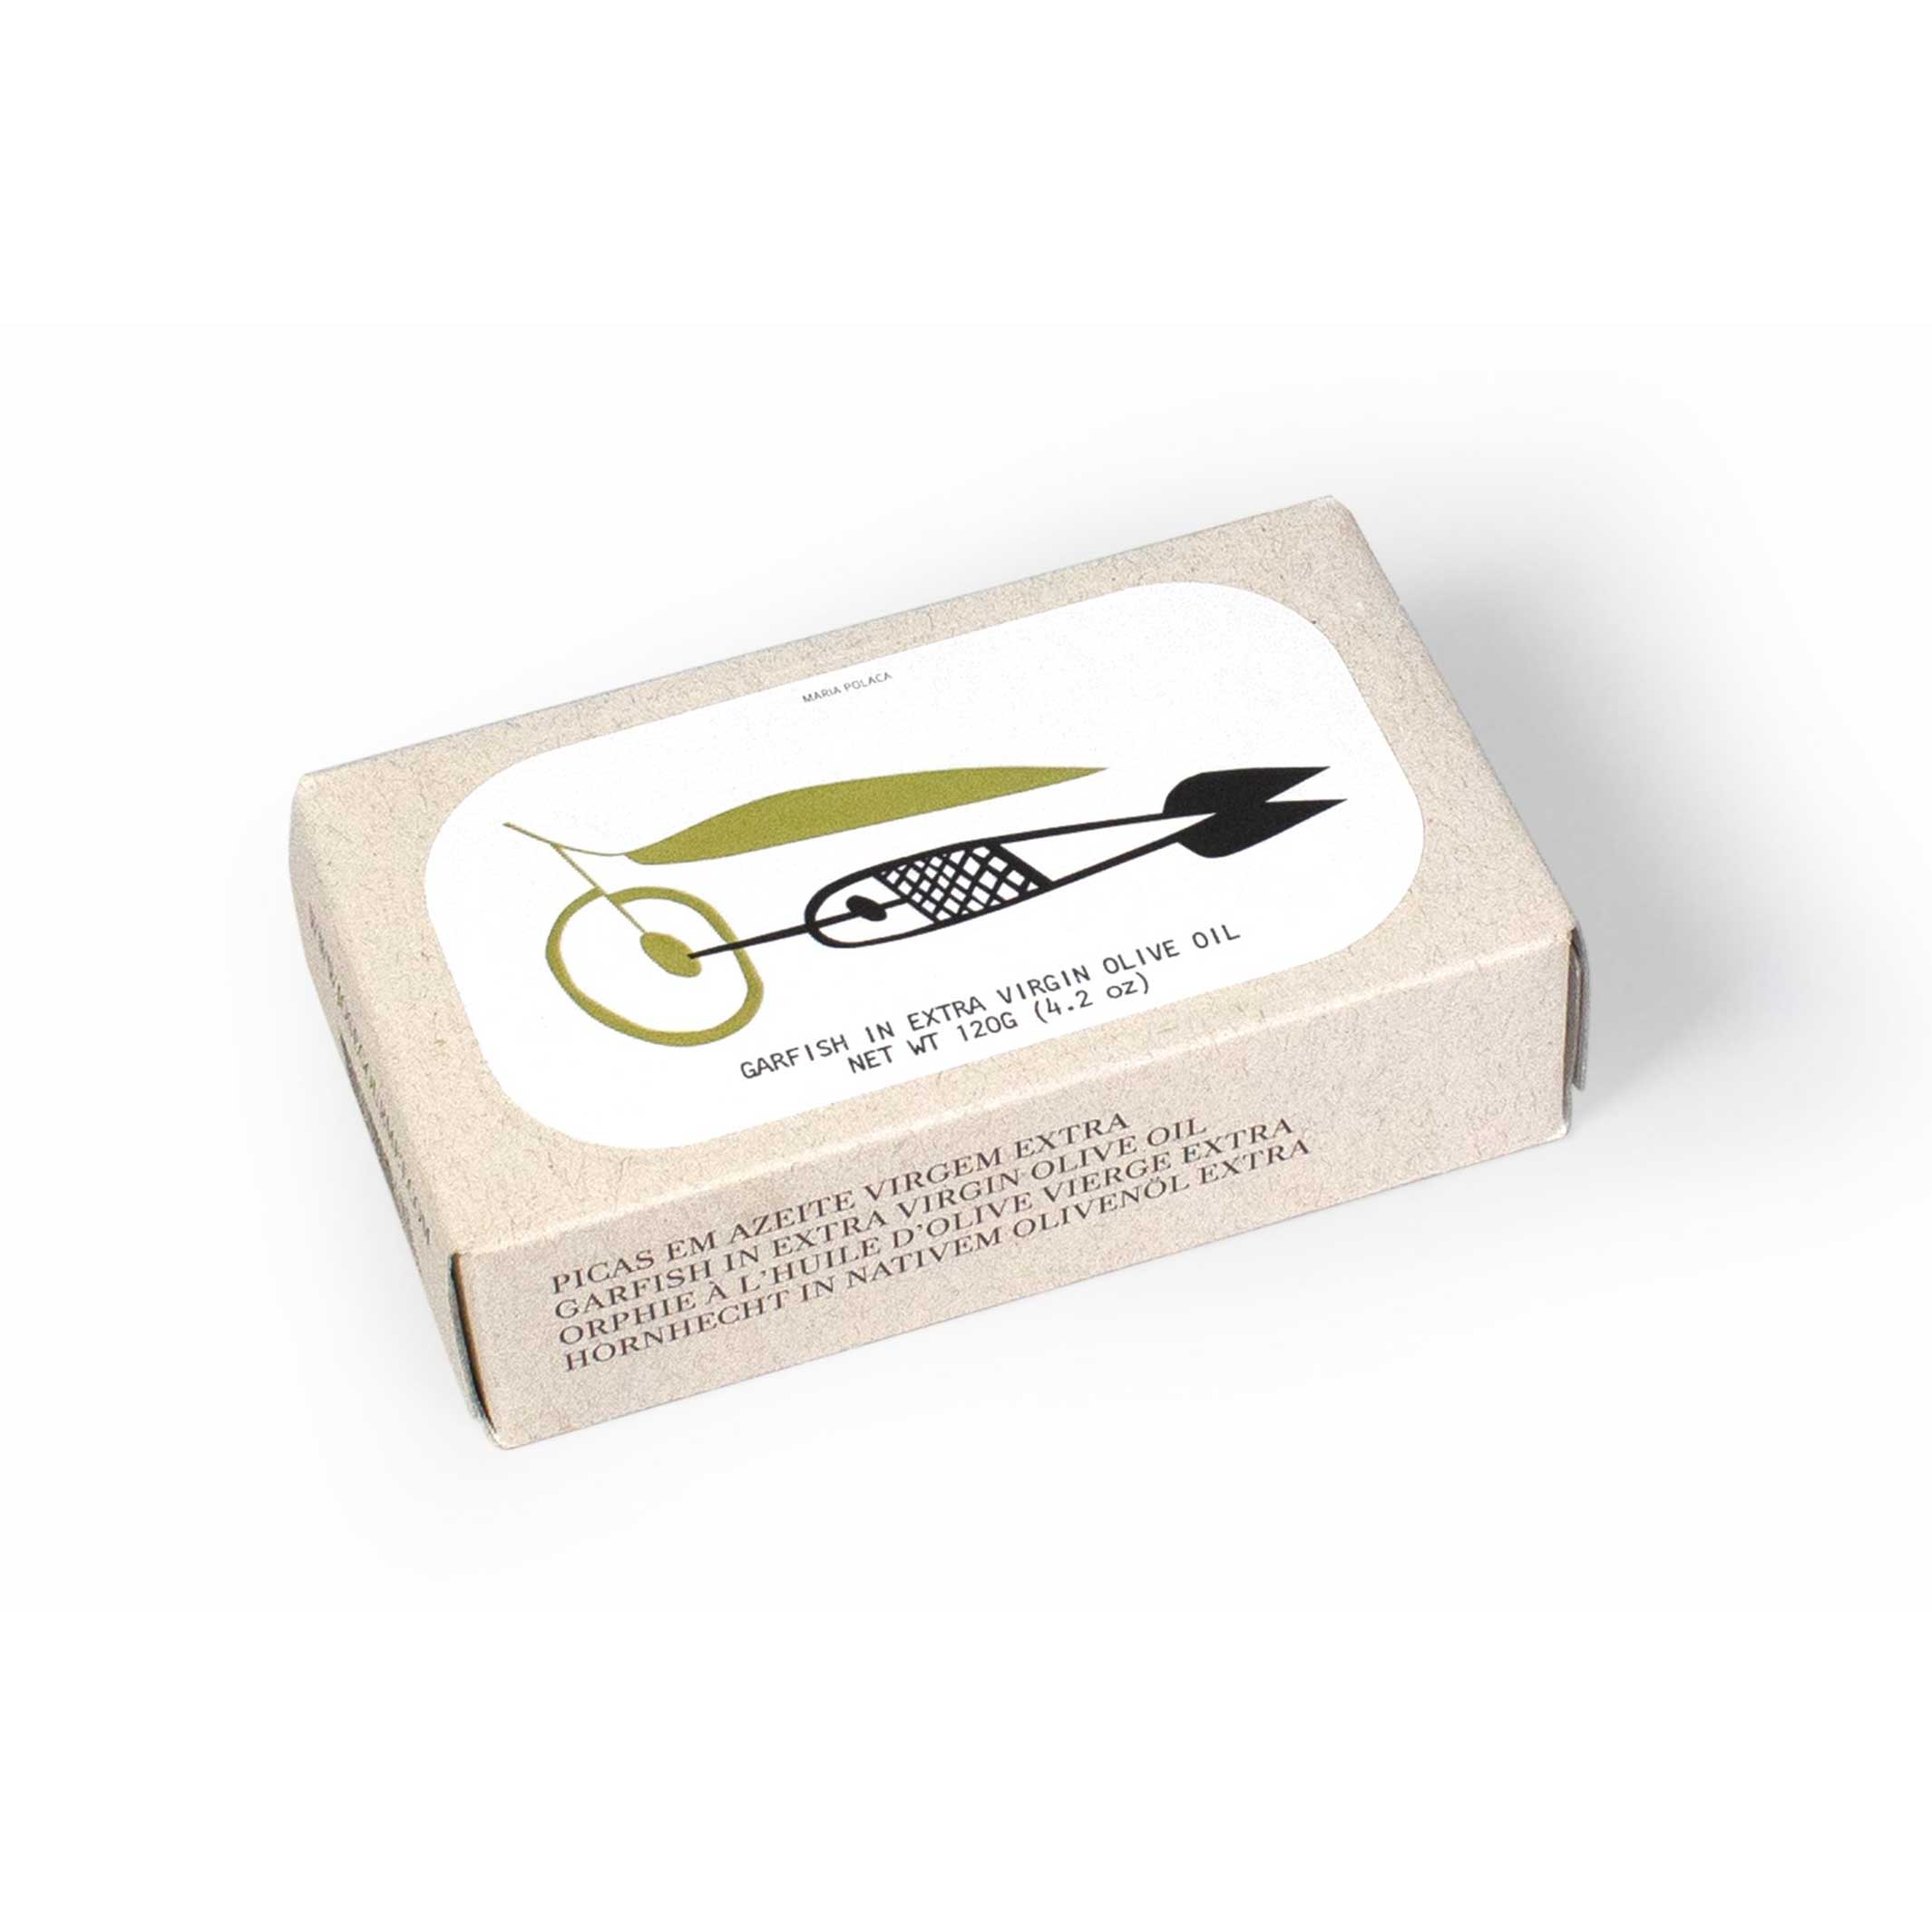 GARFISH in Extra Virgin Olive Oil | CANNED GOURMET FISH | 120 g | José Gourmet